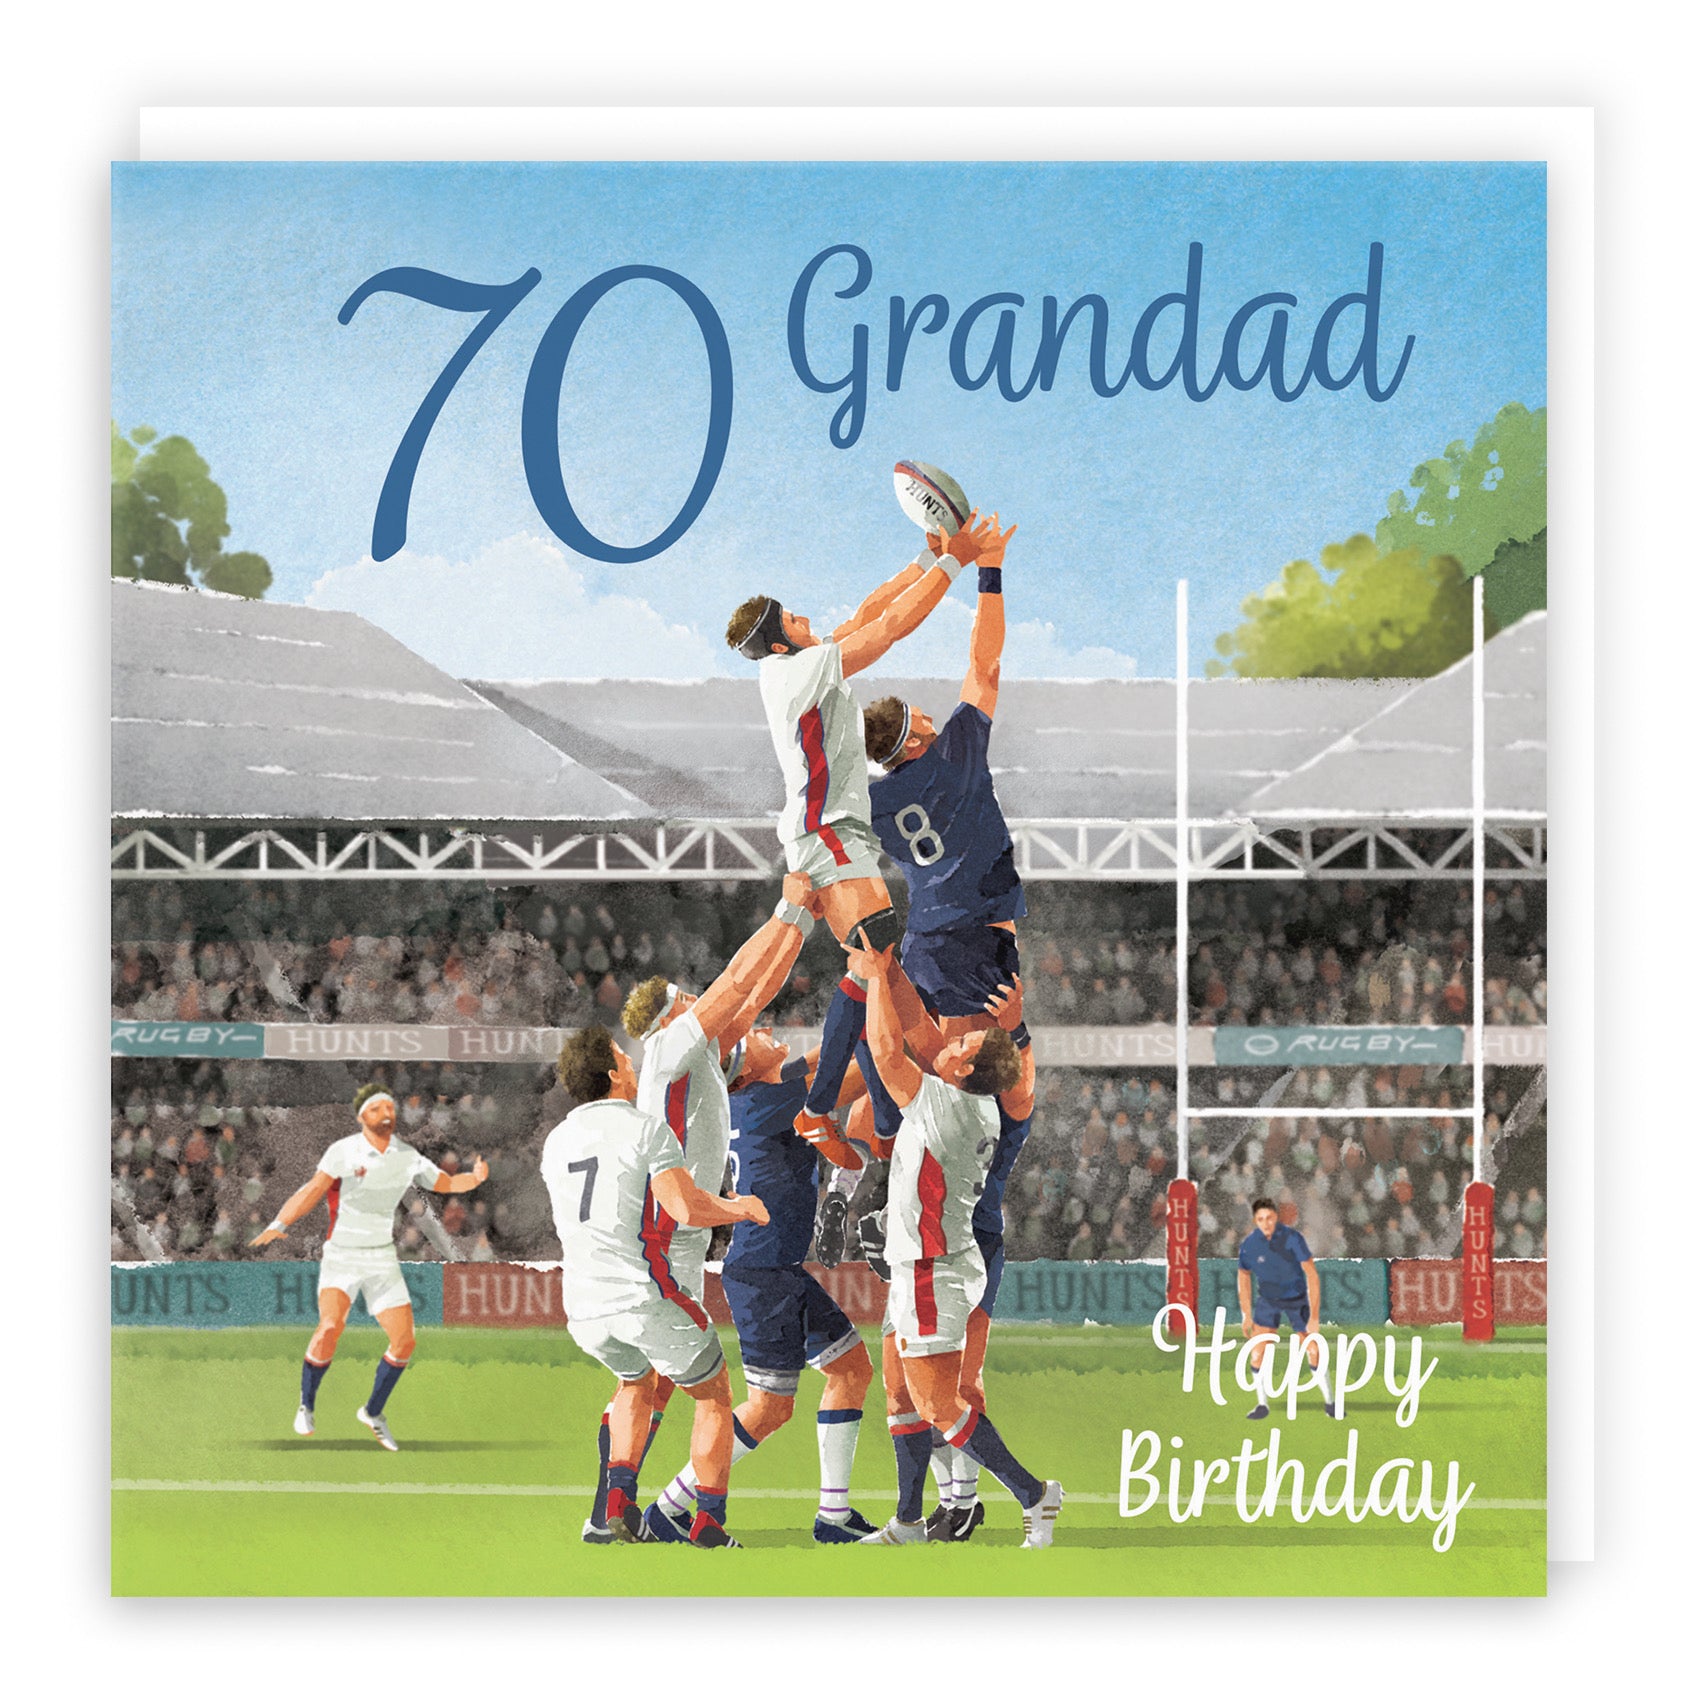 70th Grandad Rugby Birthday Card Milo's Gallery - Default Title (B0CPQTZVDT)